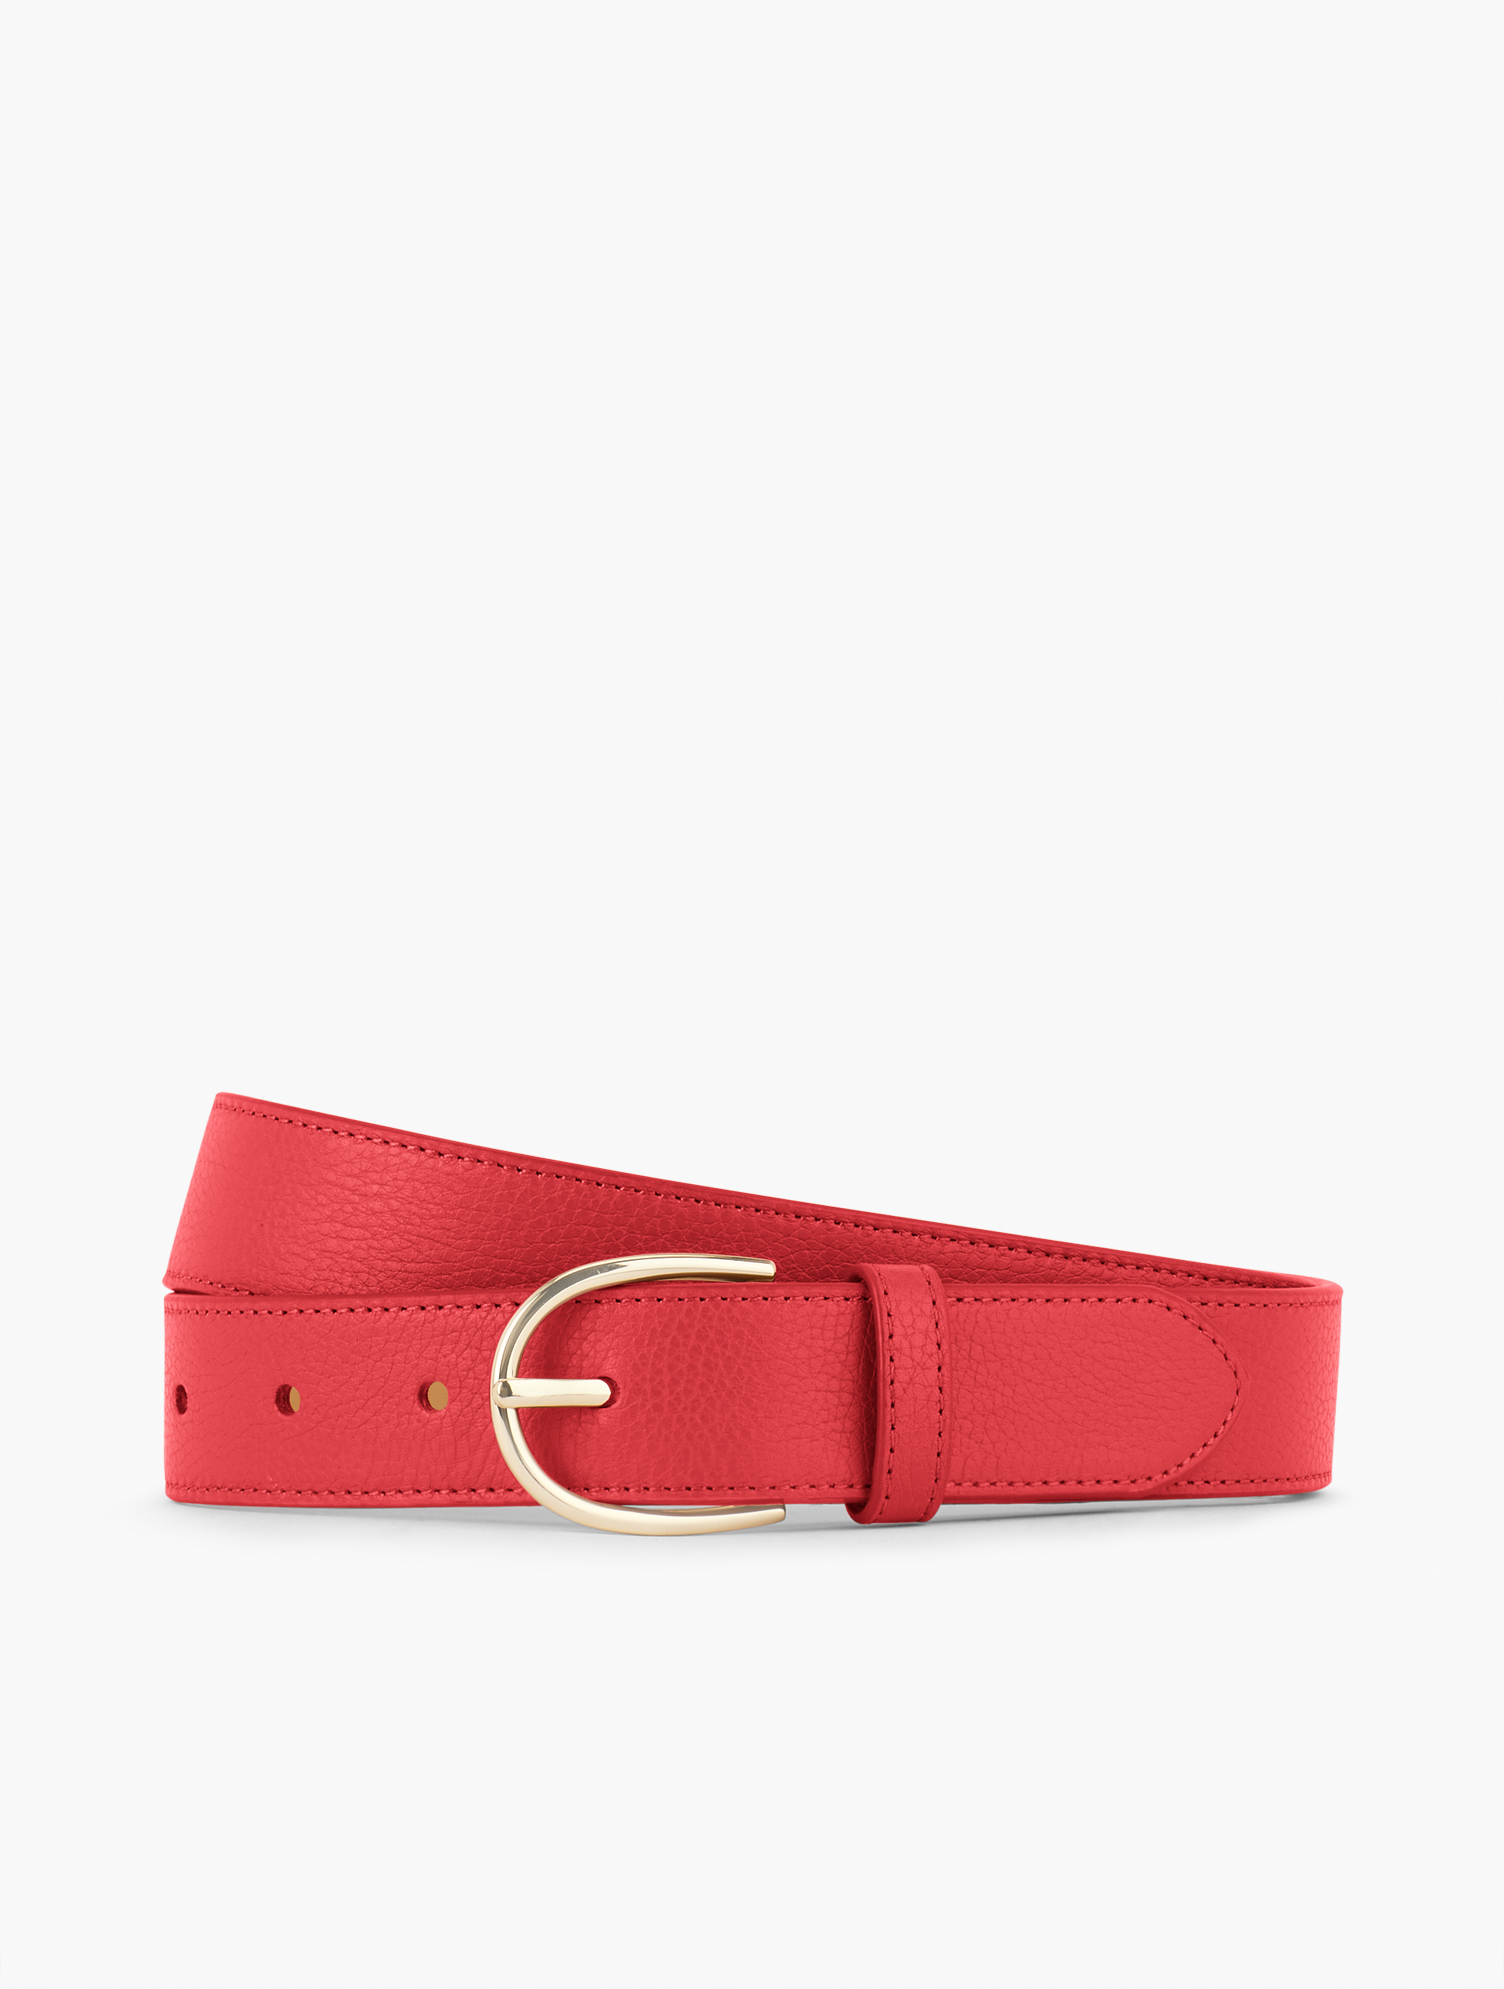 Talbots Leather Belt - Red - Xl